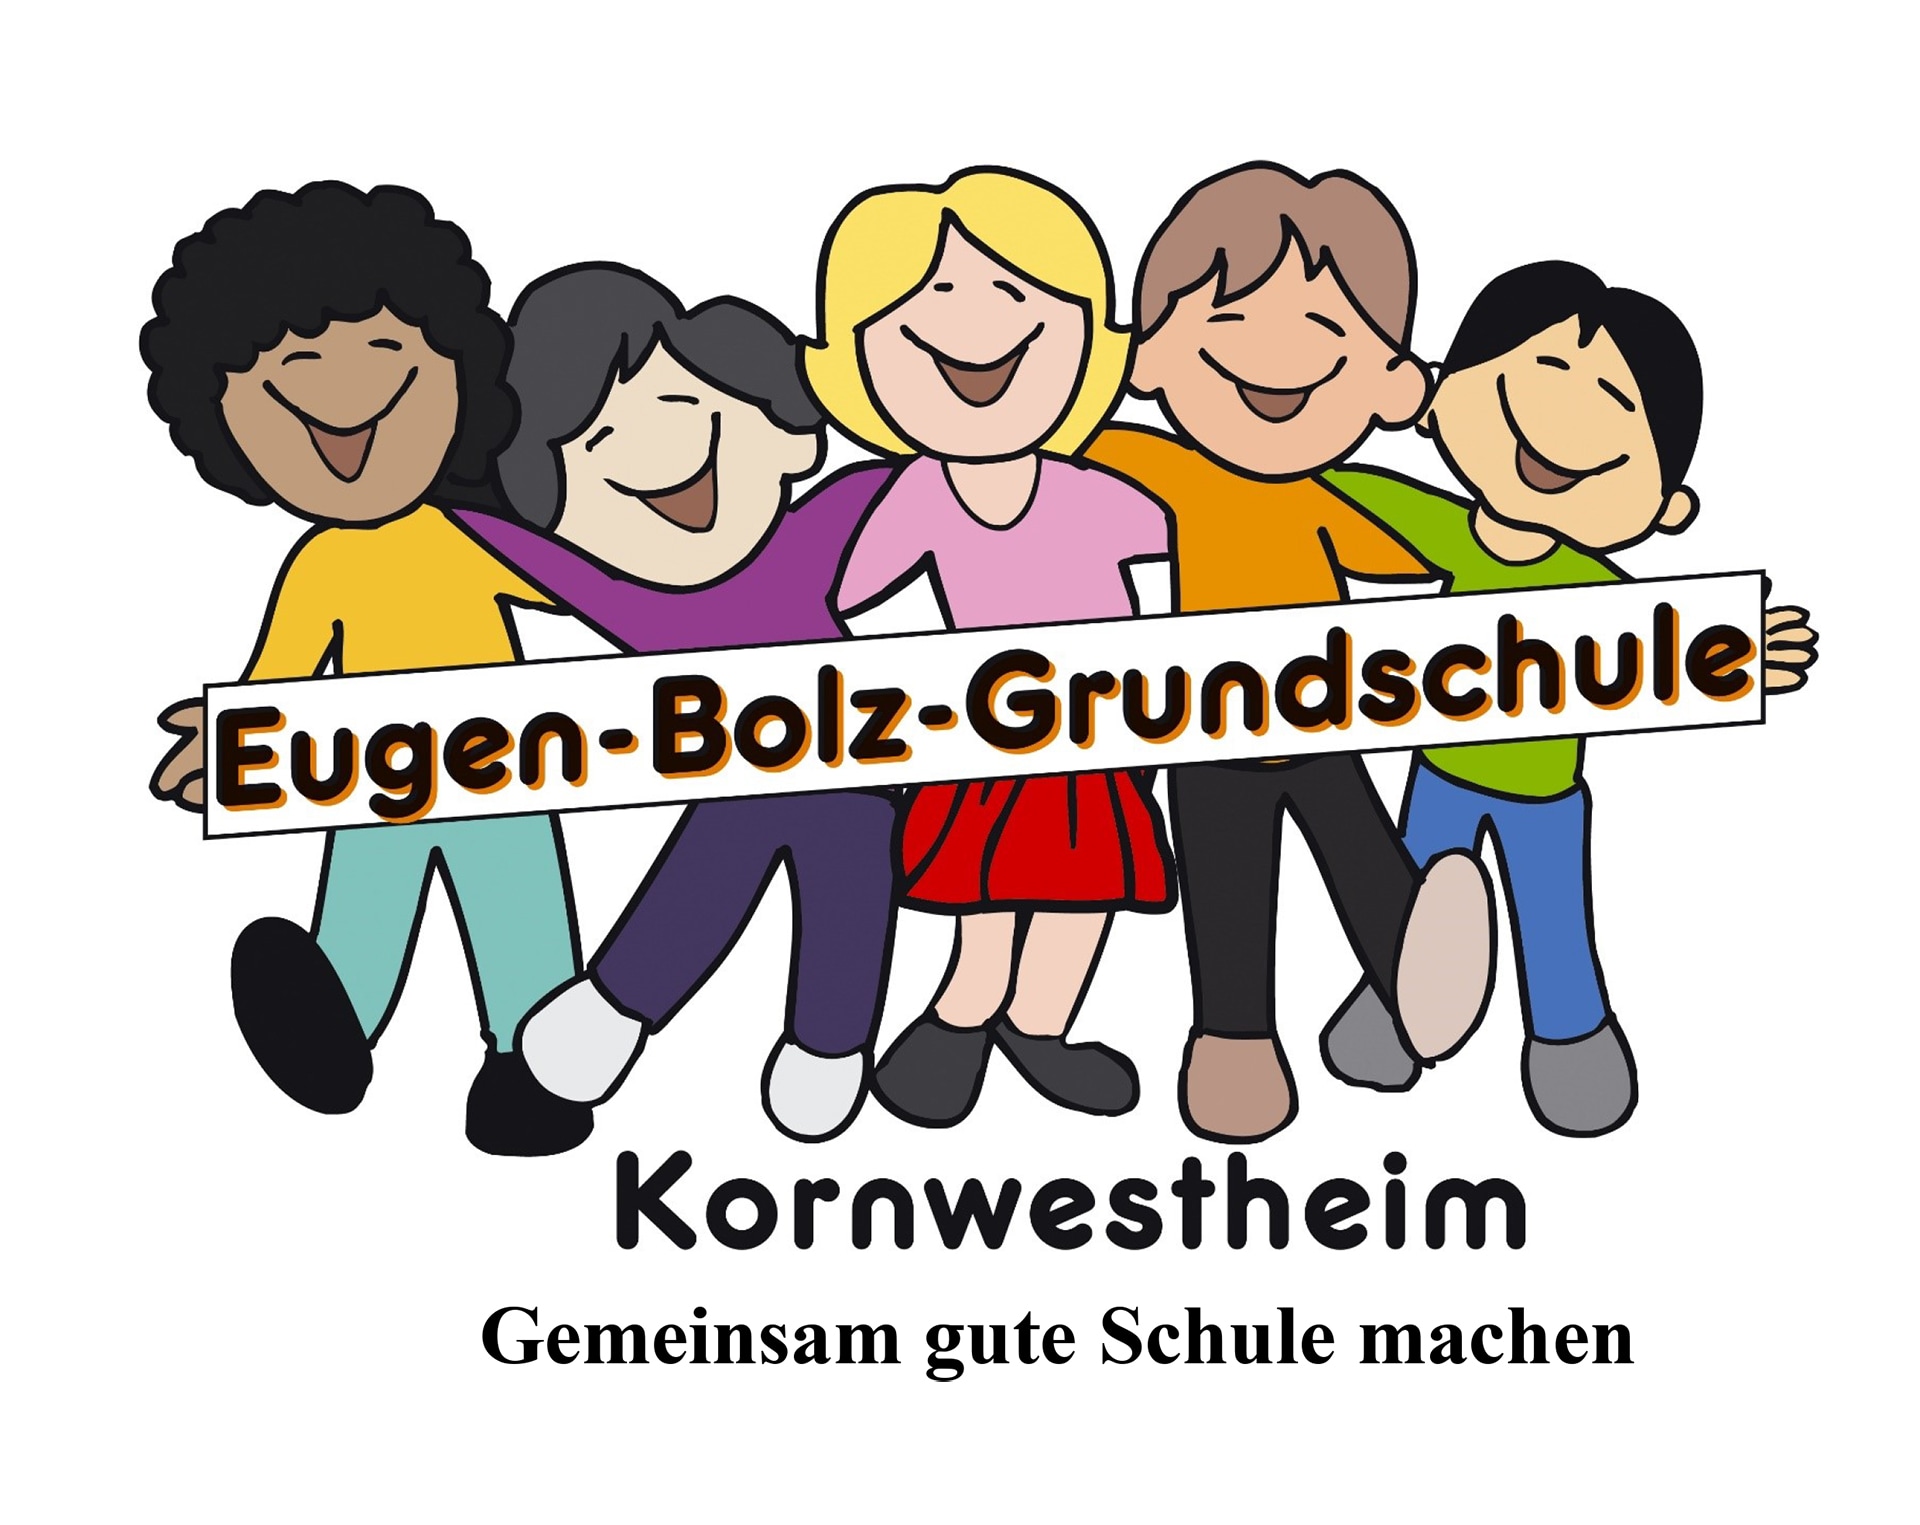 Eugen-Bolz-Grundschule, Kornwestheim